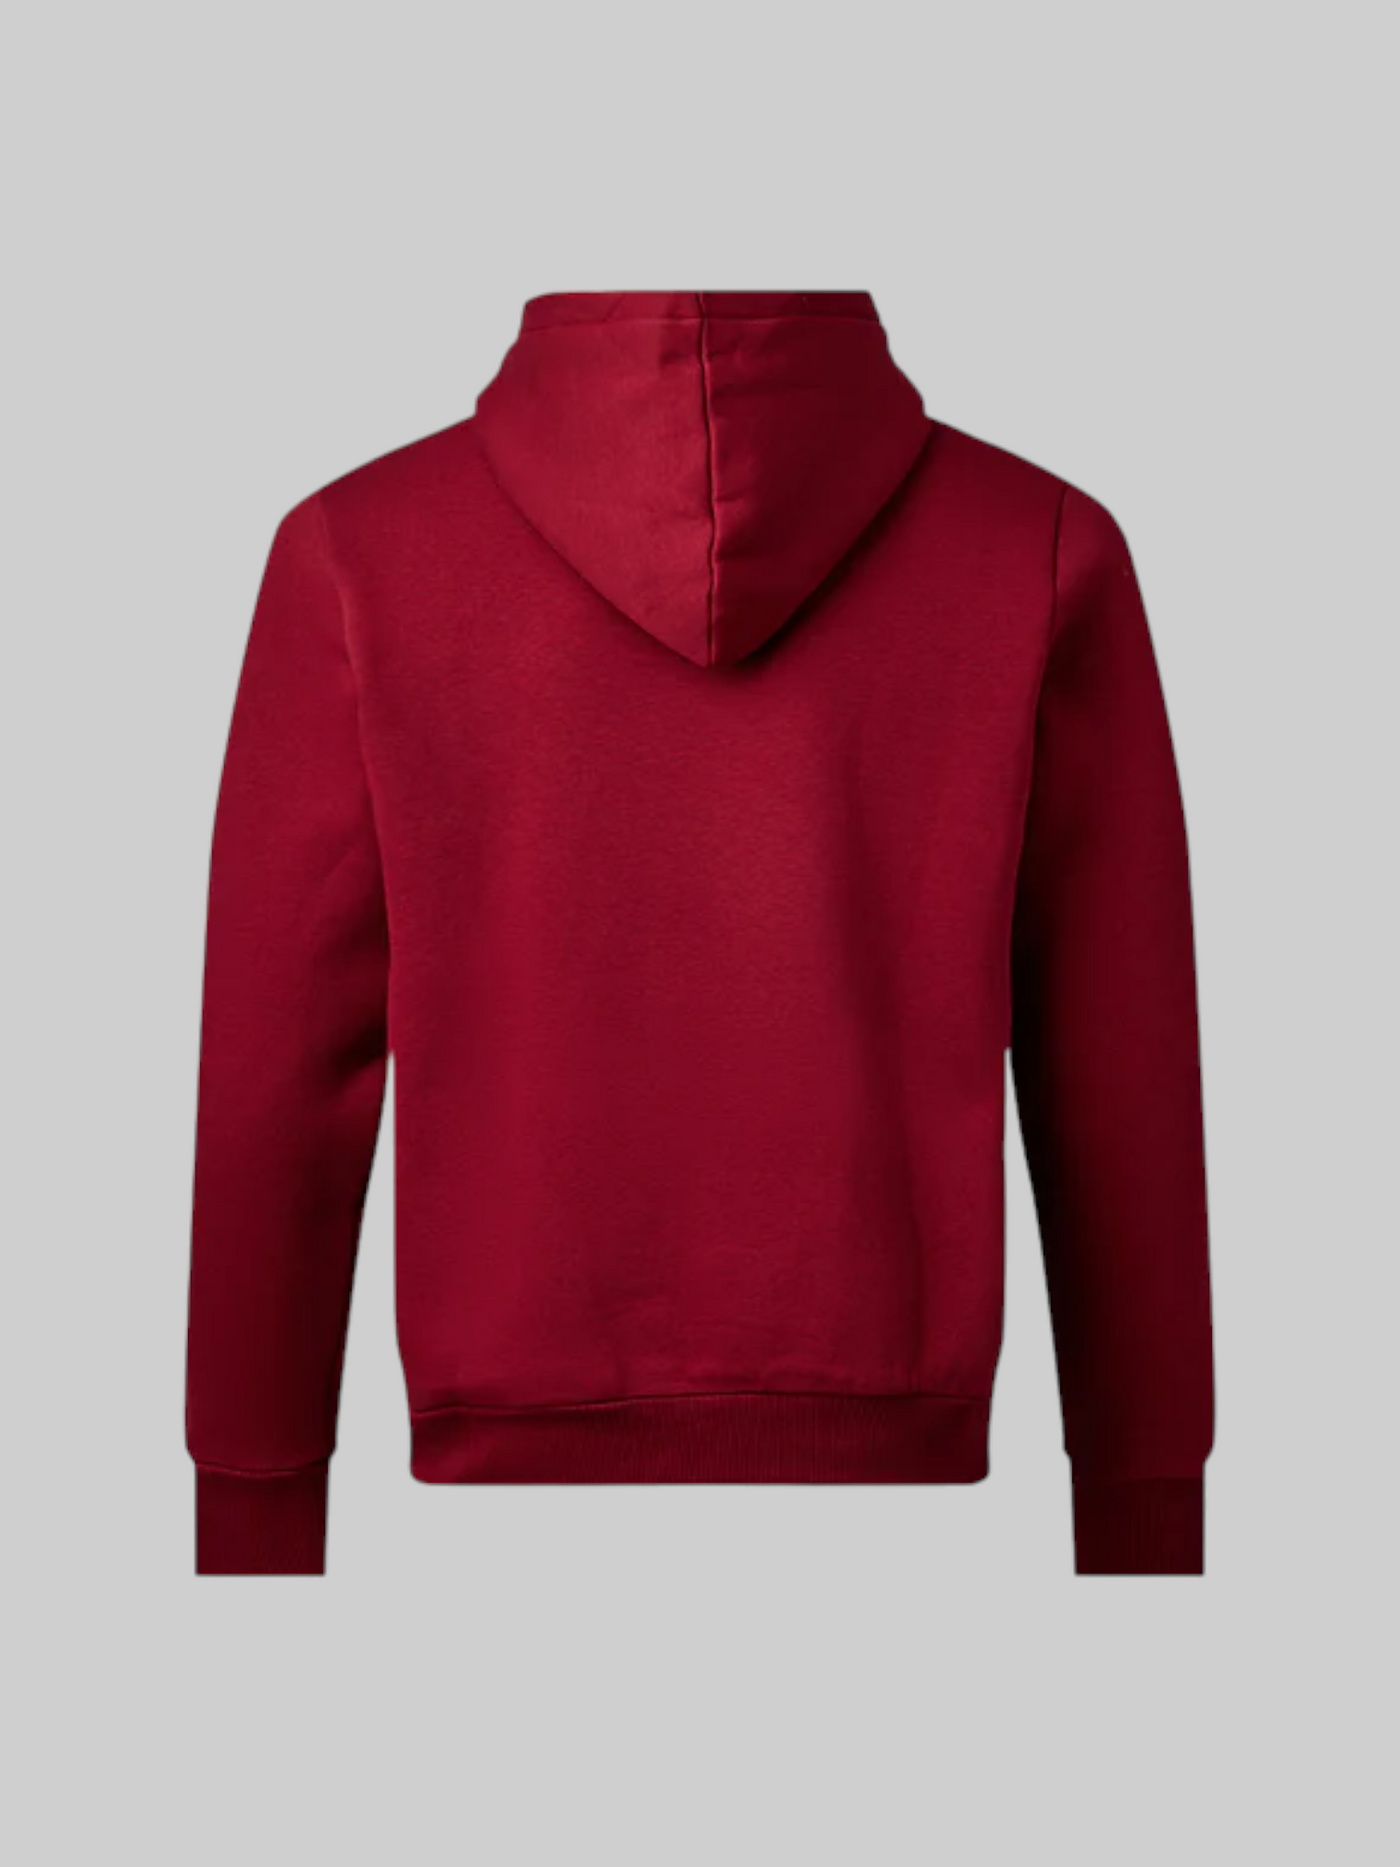 FirstGrade - CLUB / LOGO - Bordeaux hoodie